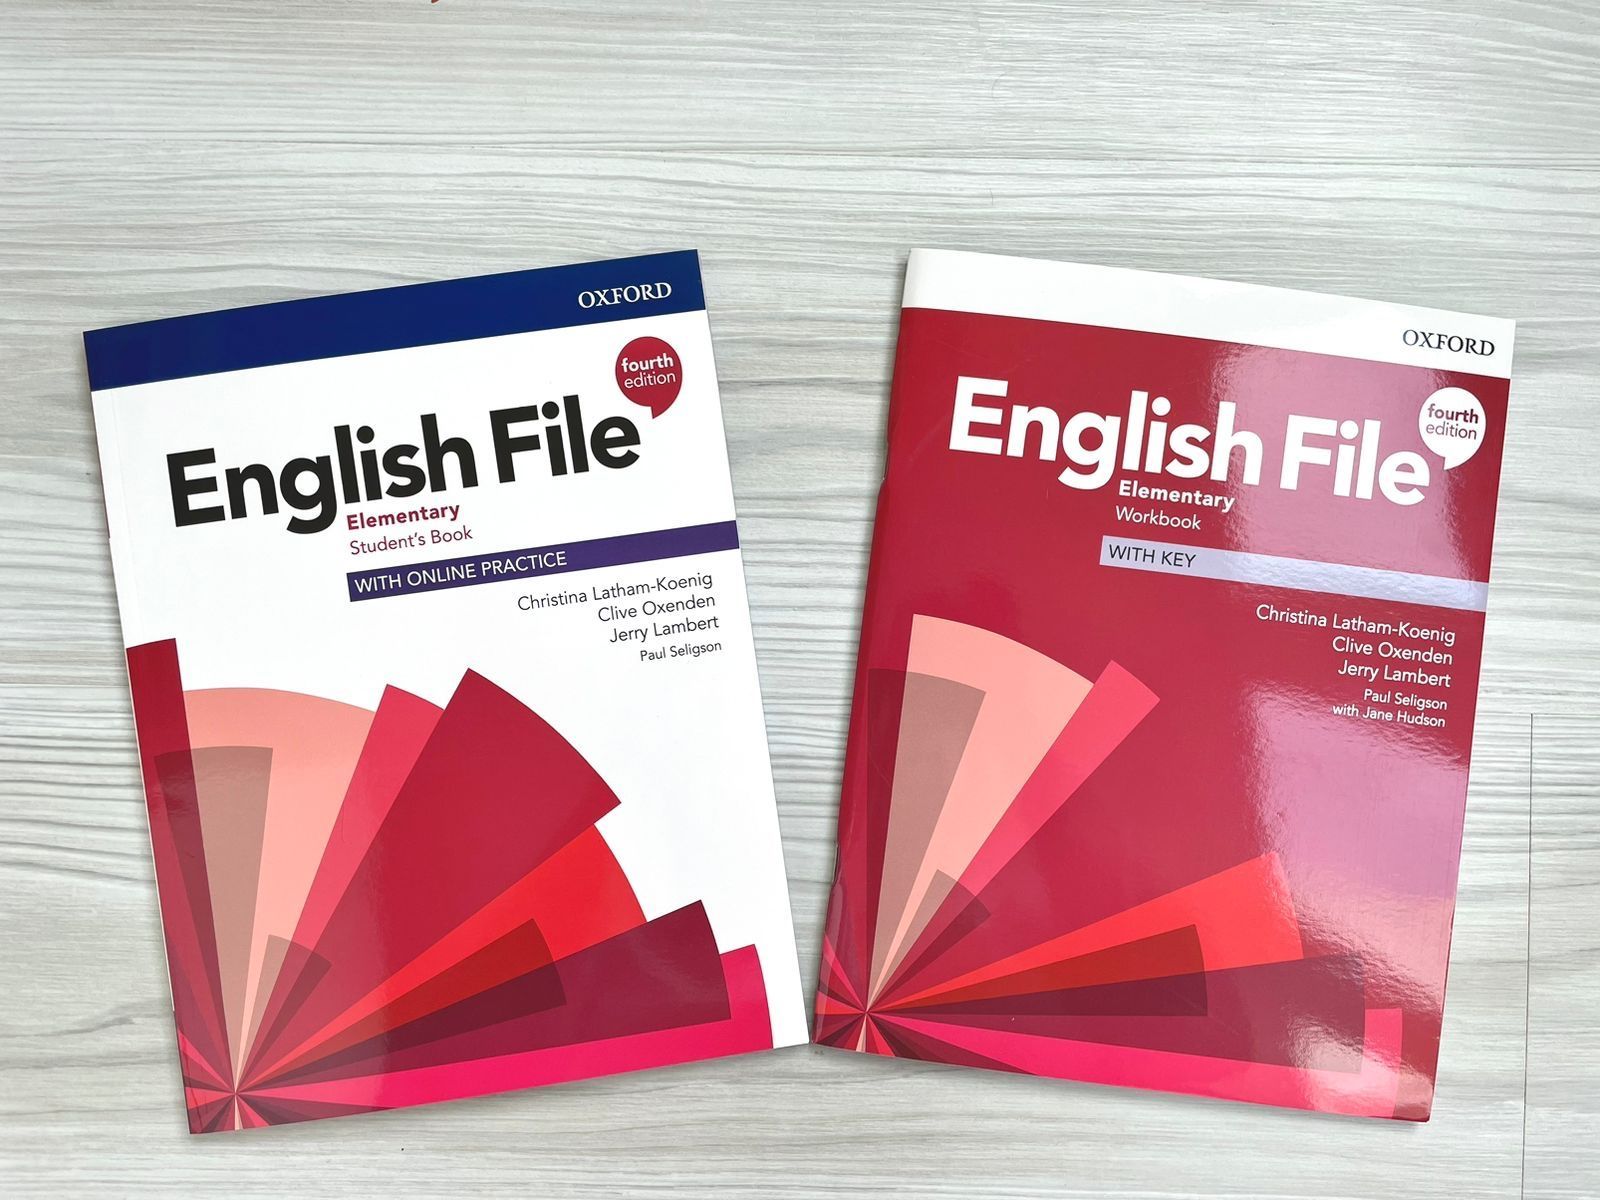 English file: Elementary. English file 4 Edition Elementary. English file Elementary Workbook fourth Edition. English file Elementary 4th Edition. New english file elementary 4th